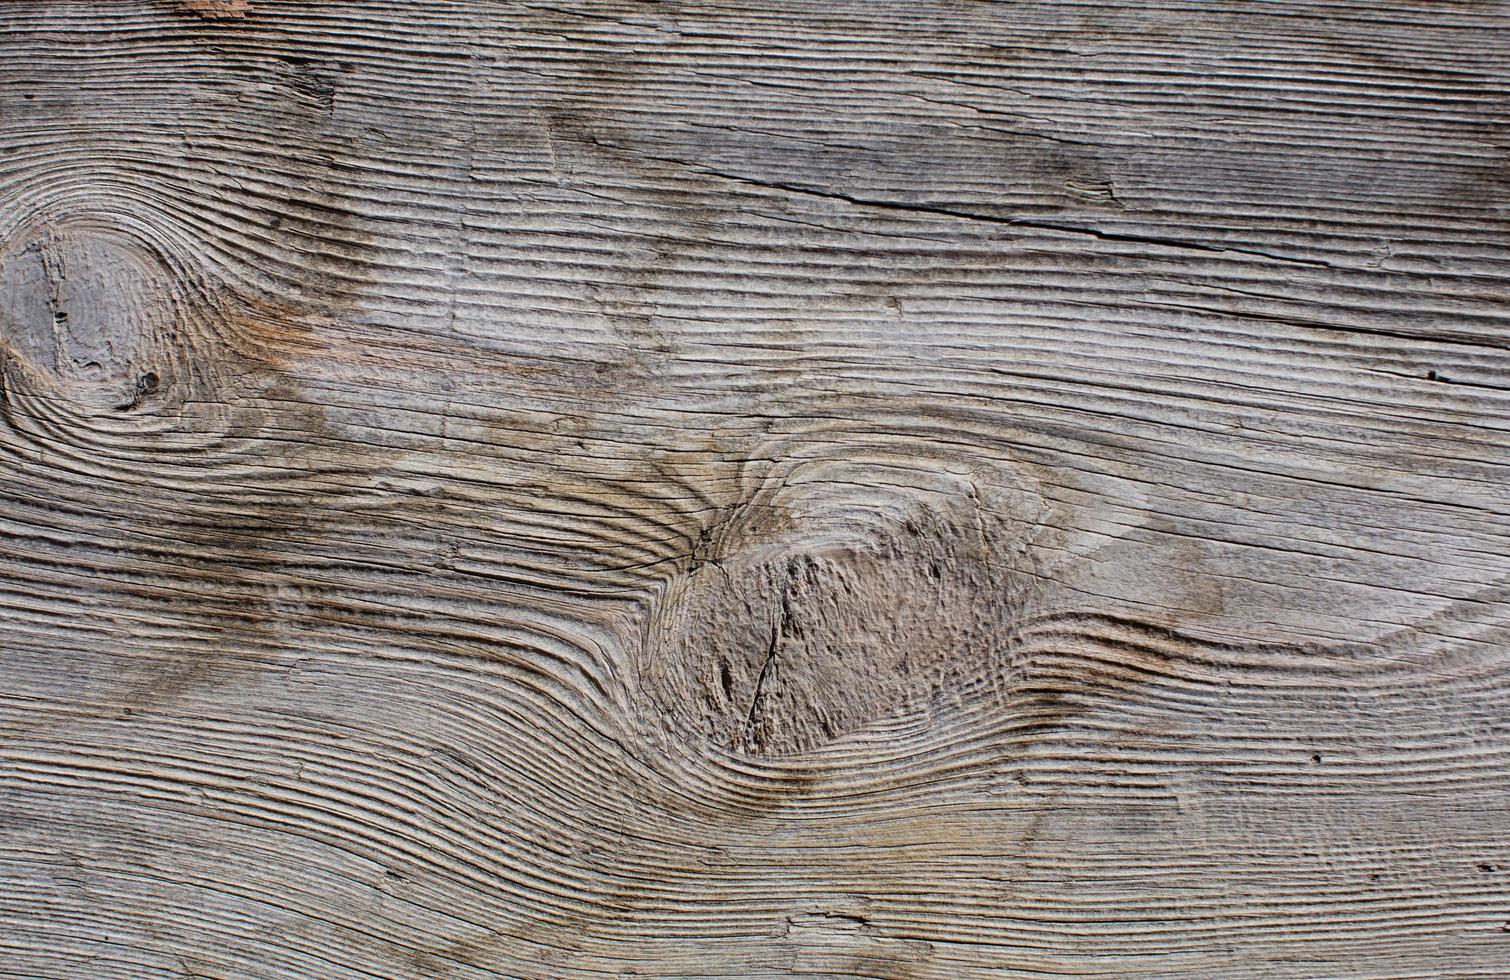 Wood grain texture photo